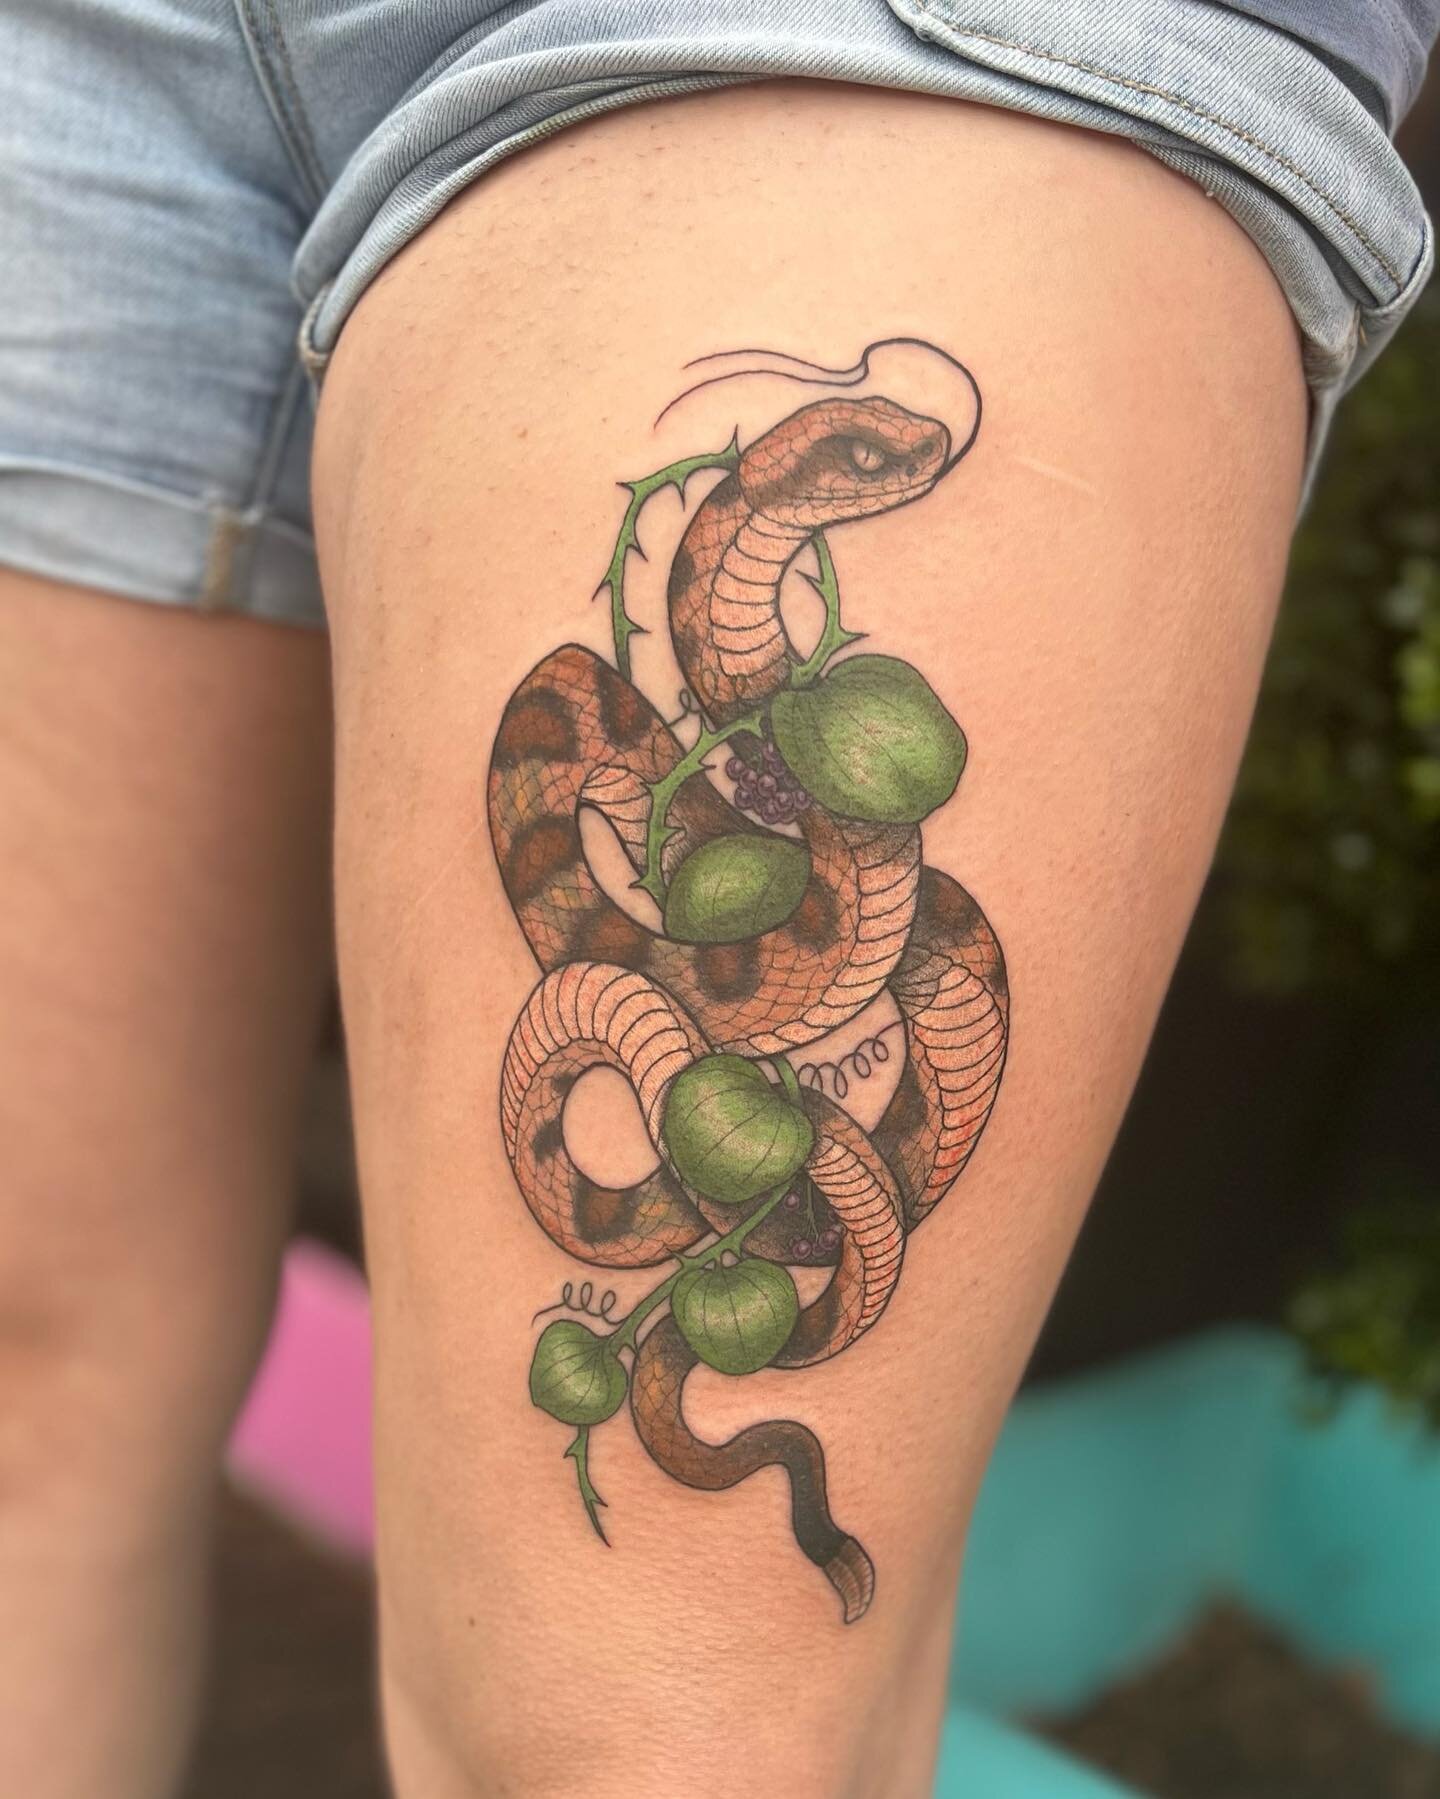 Timber rattler + greenbrier 
Loved making this snake tatty for Coline during my guest spot at @black_rabbit_tattoo 
&bull;
#RayCorsonTattoo 
#DallasTattooArtist 
#TexasTattoos
#FemaleTattooer 
#SnakeTattoo 
#TimberRattlesnake